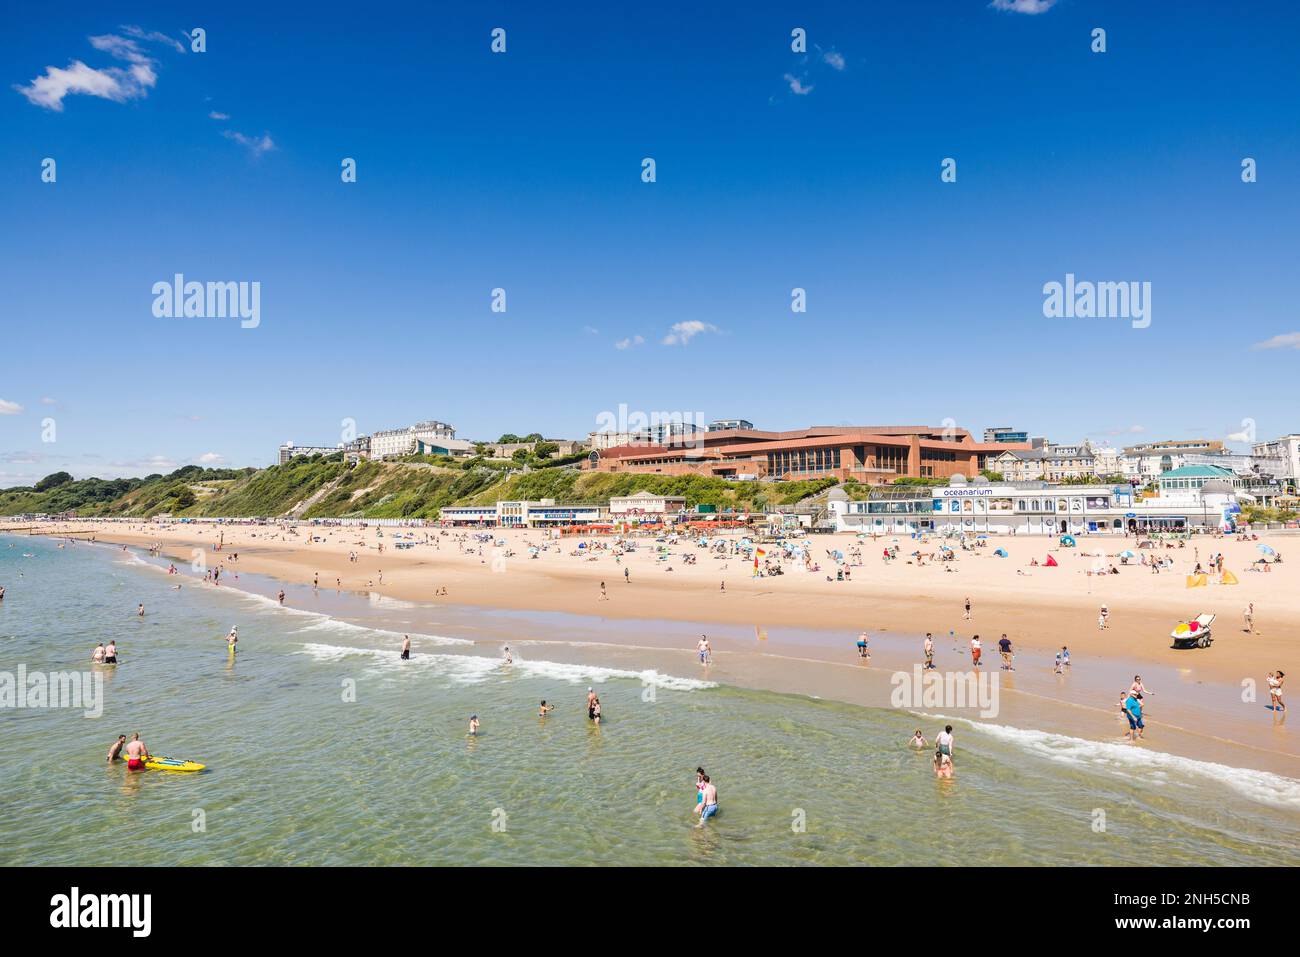 BOURNEMOUTH, UK - July 08, 2022. People enjoying summer by the sea on a sandy beach. Bournemouth, Dorset, UK Stock Photo